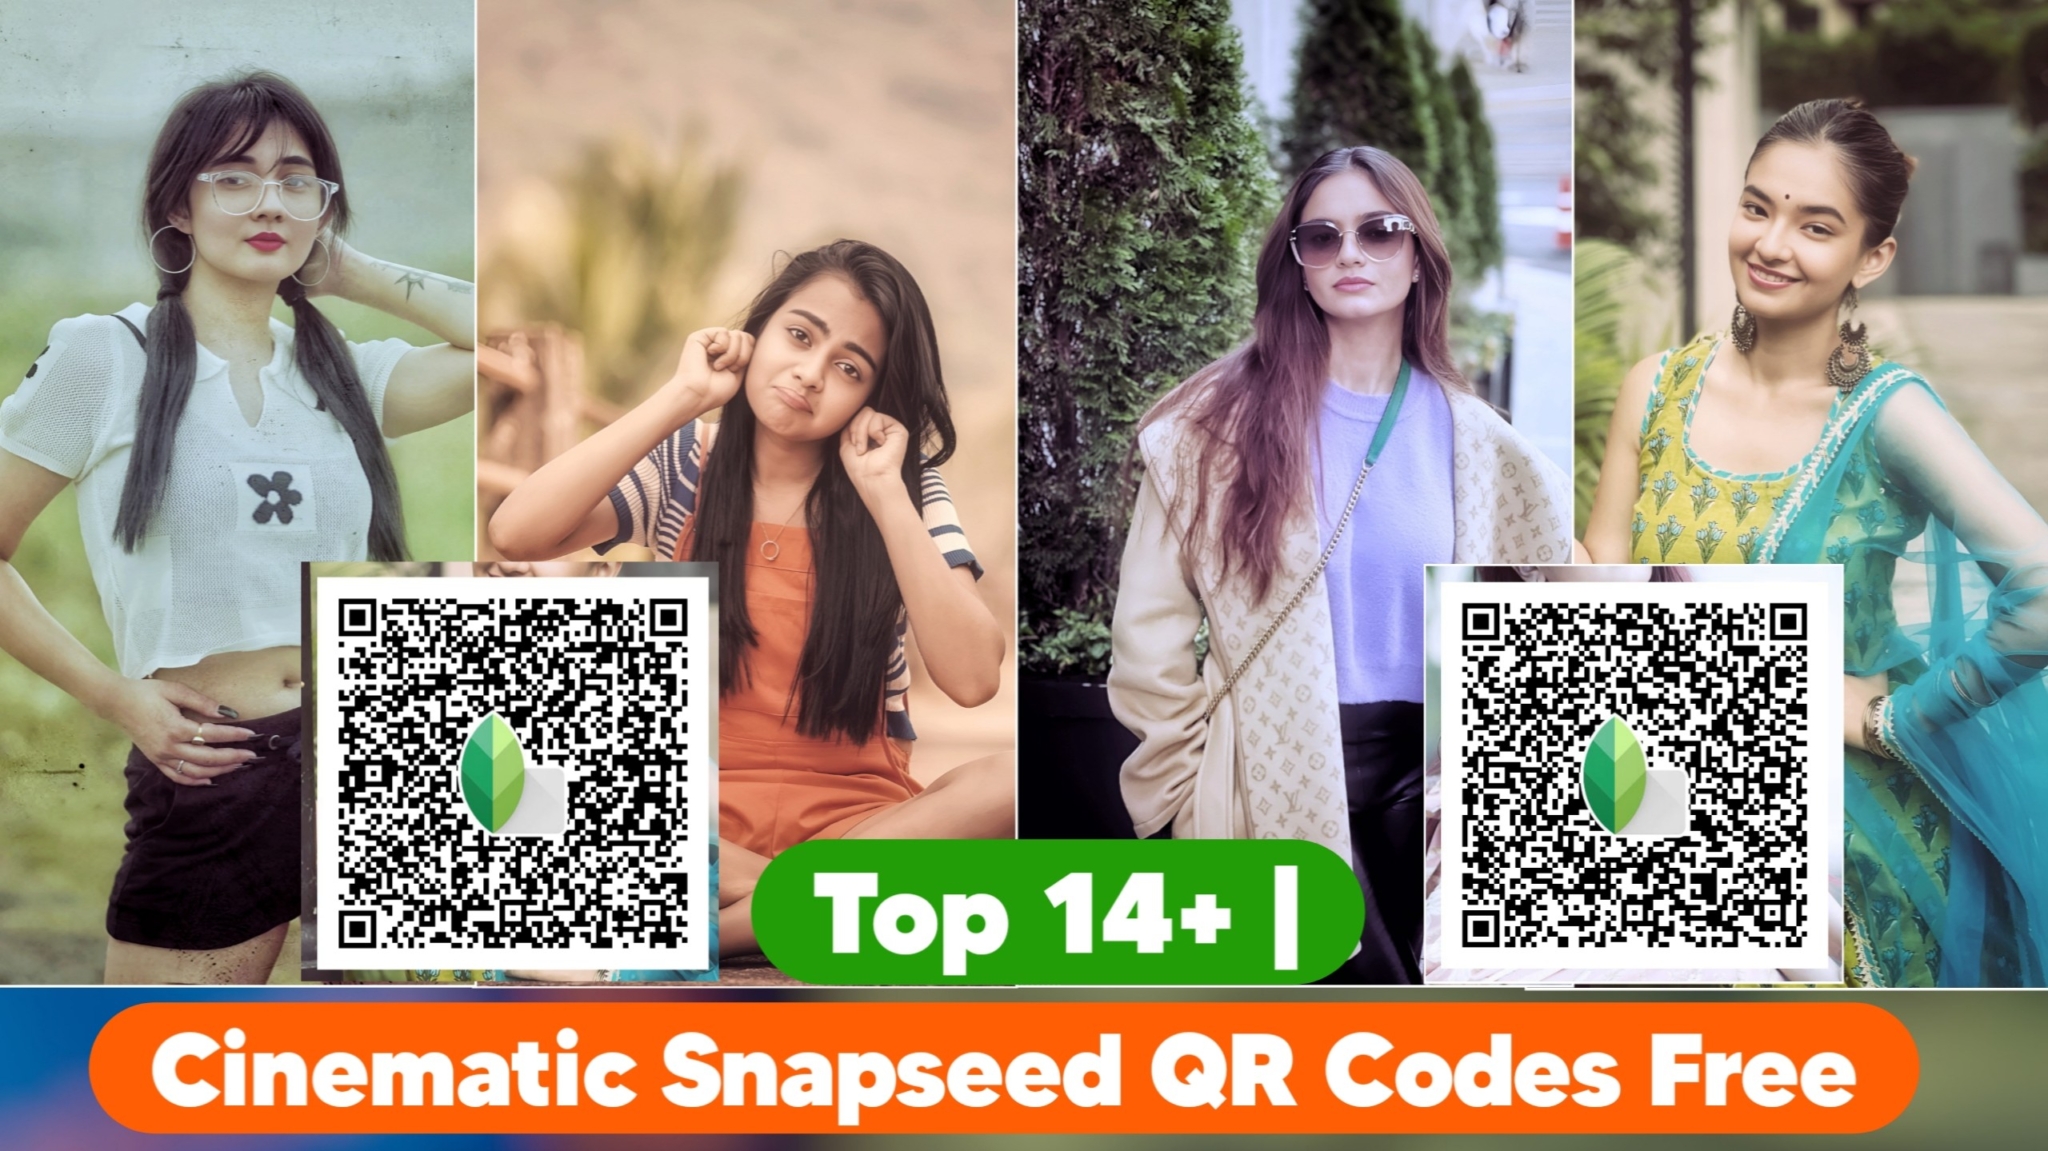 Top 14+ Cinematic Snapseed QR Code